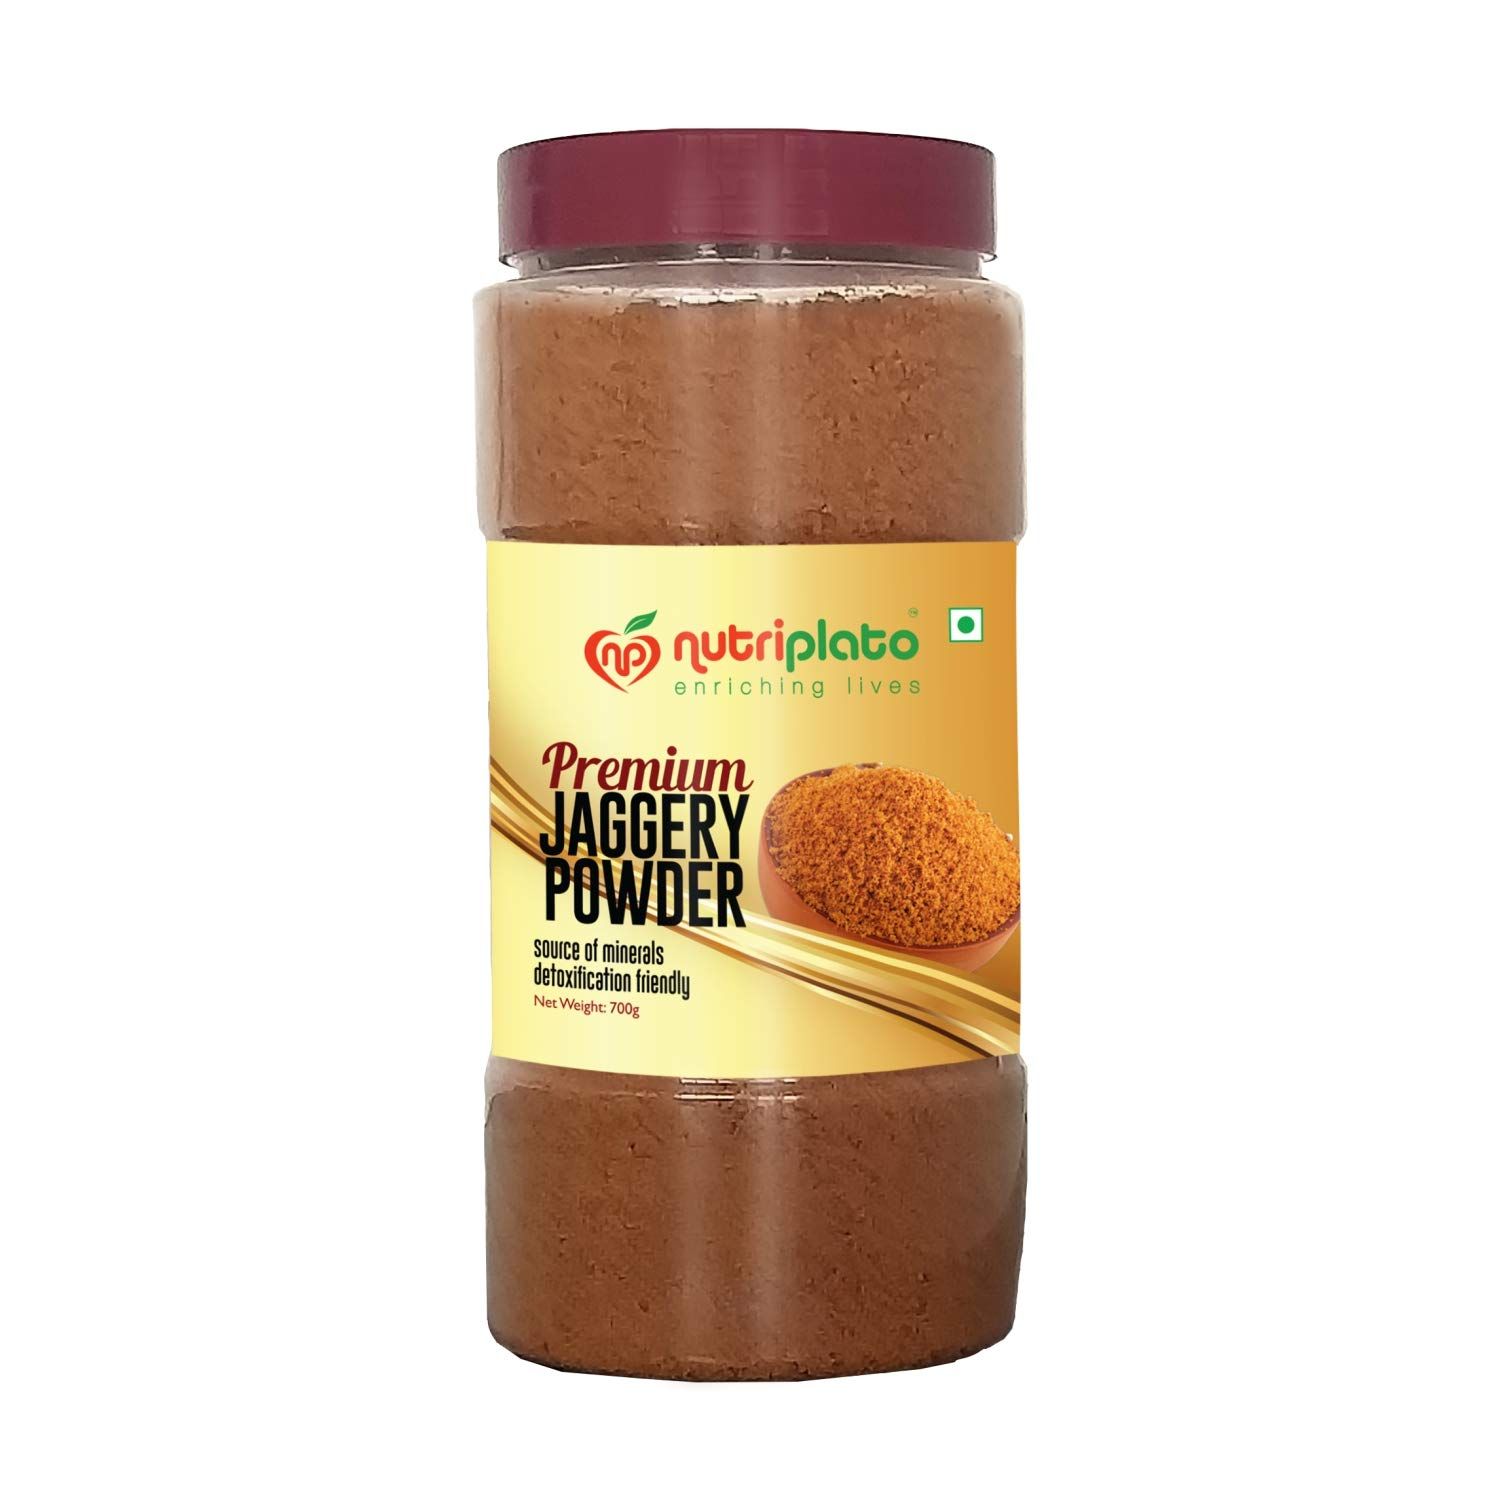 Nutriplato Enriching Lives Jaggery Powder Premium Image